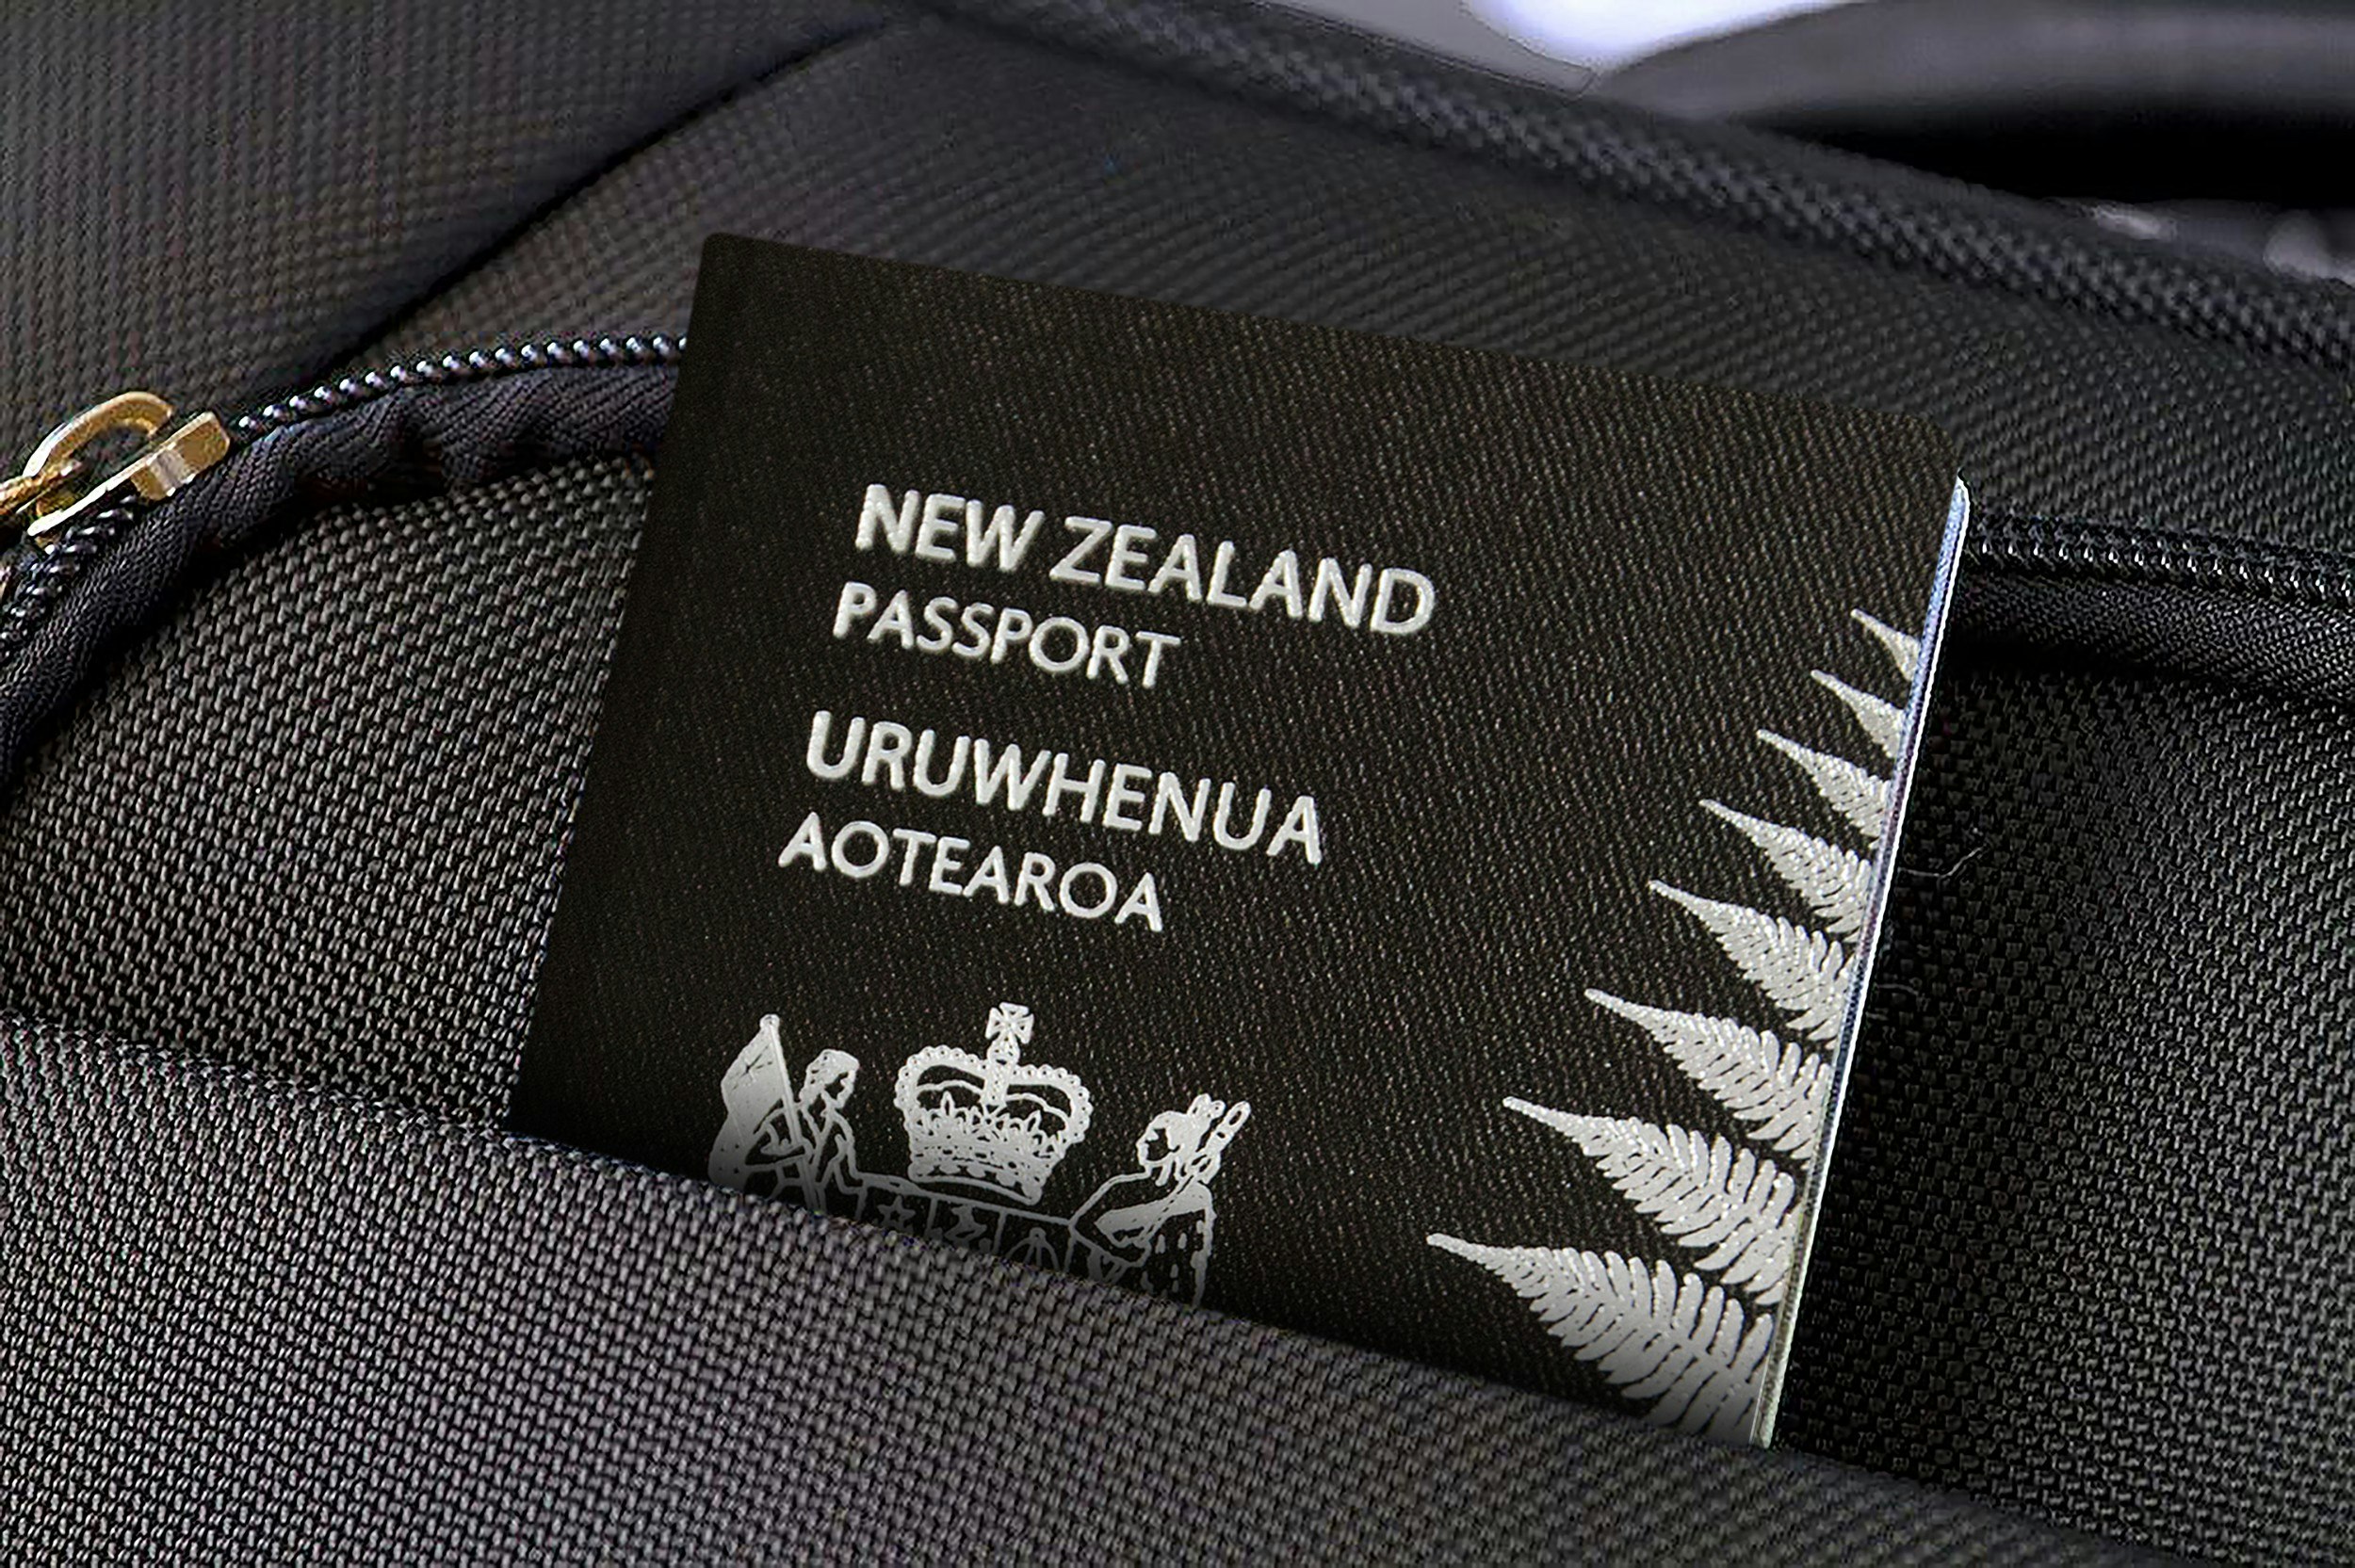 New Zealand passport.jpg